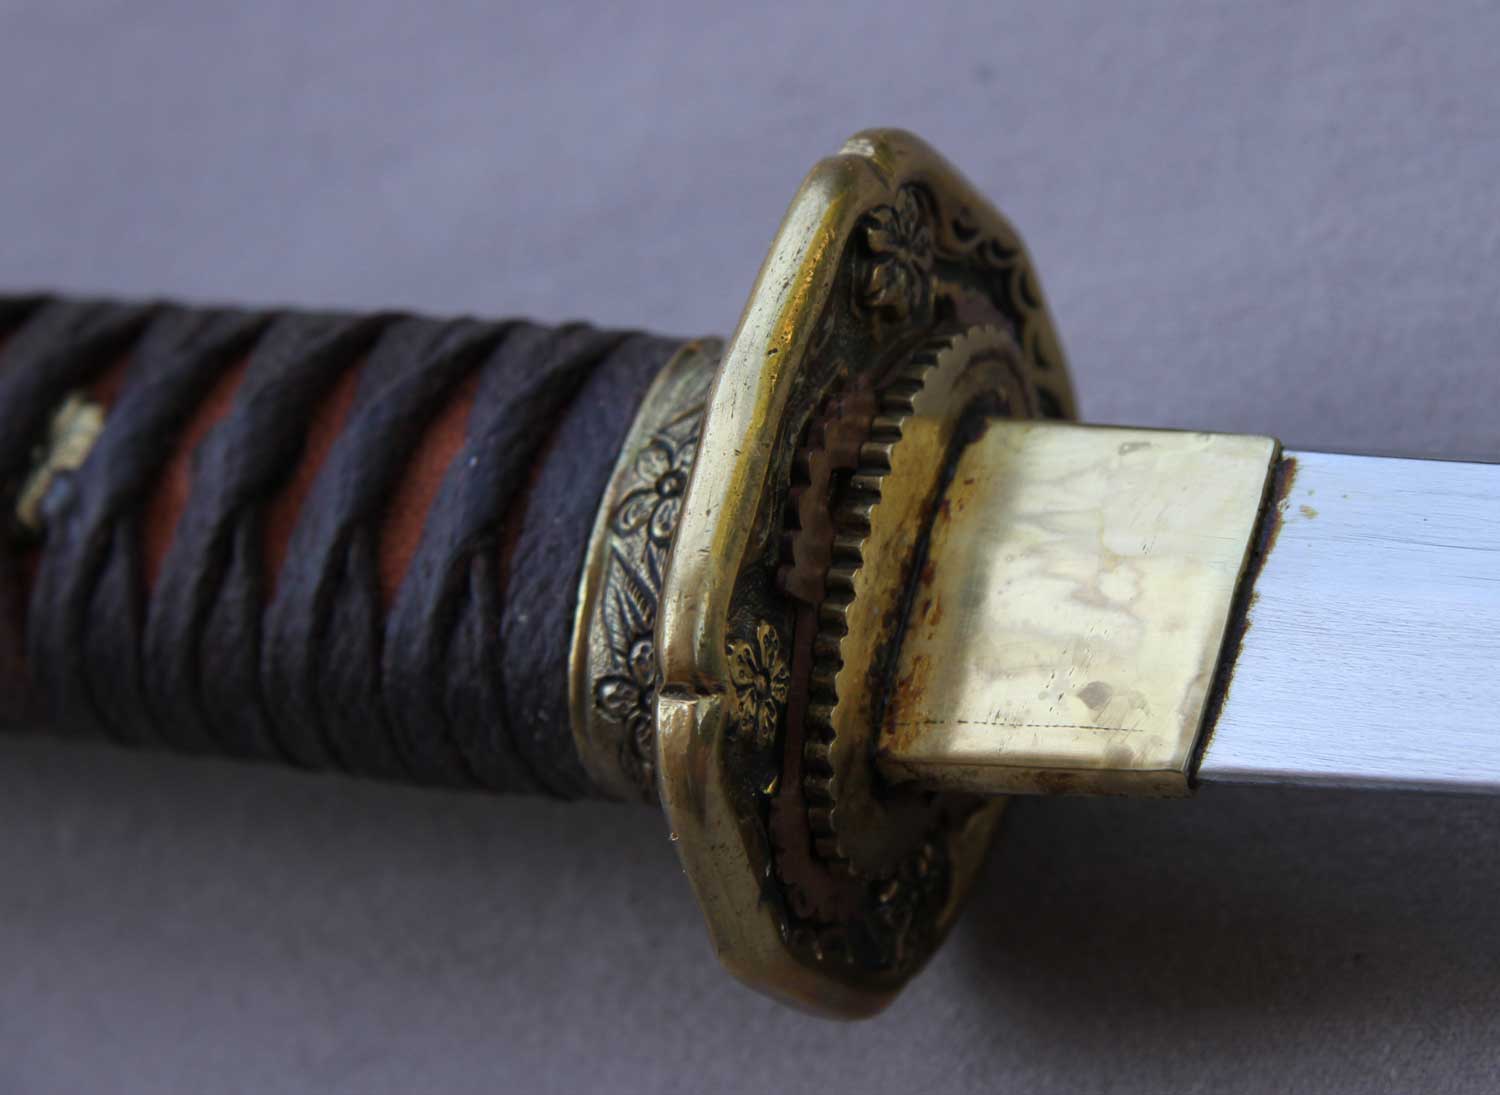 Japanese, Officer's Shin-gunto Sword - Click Image to Close